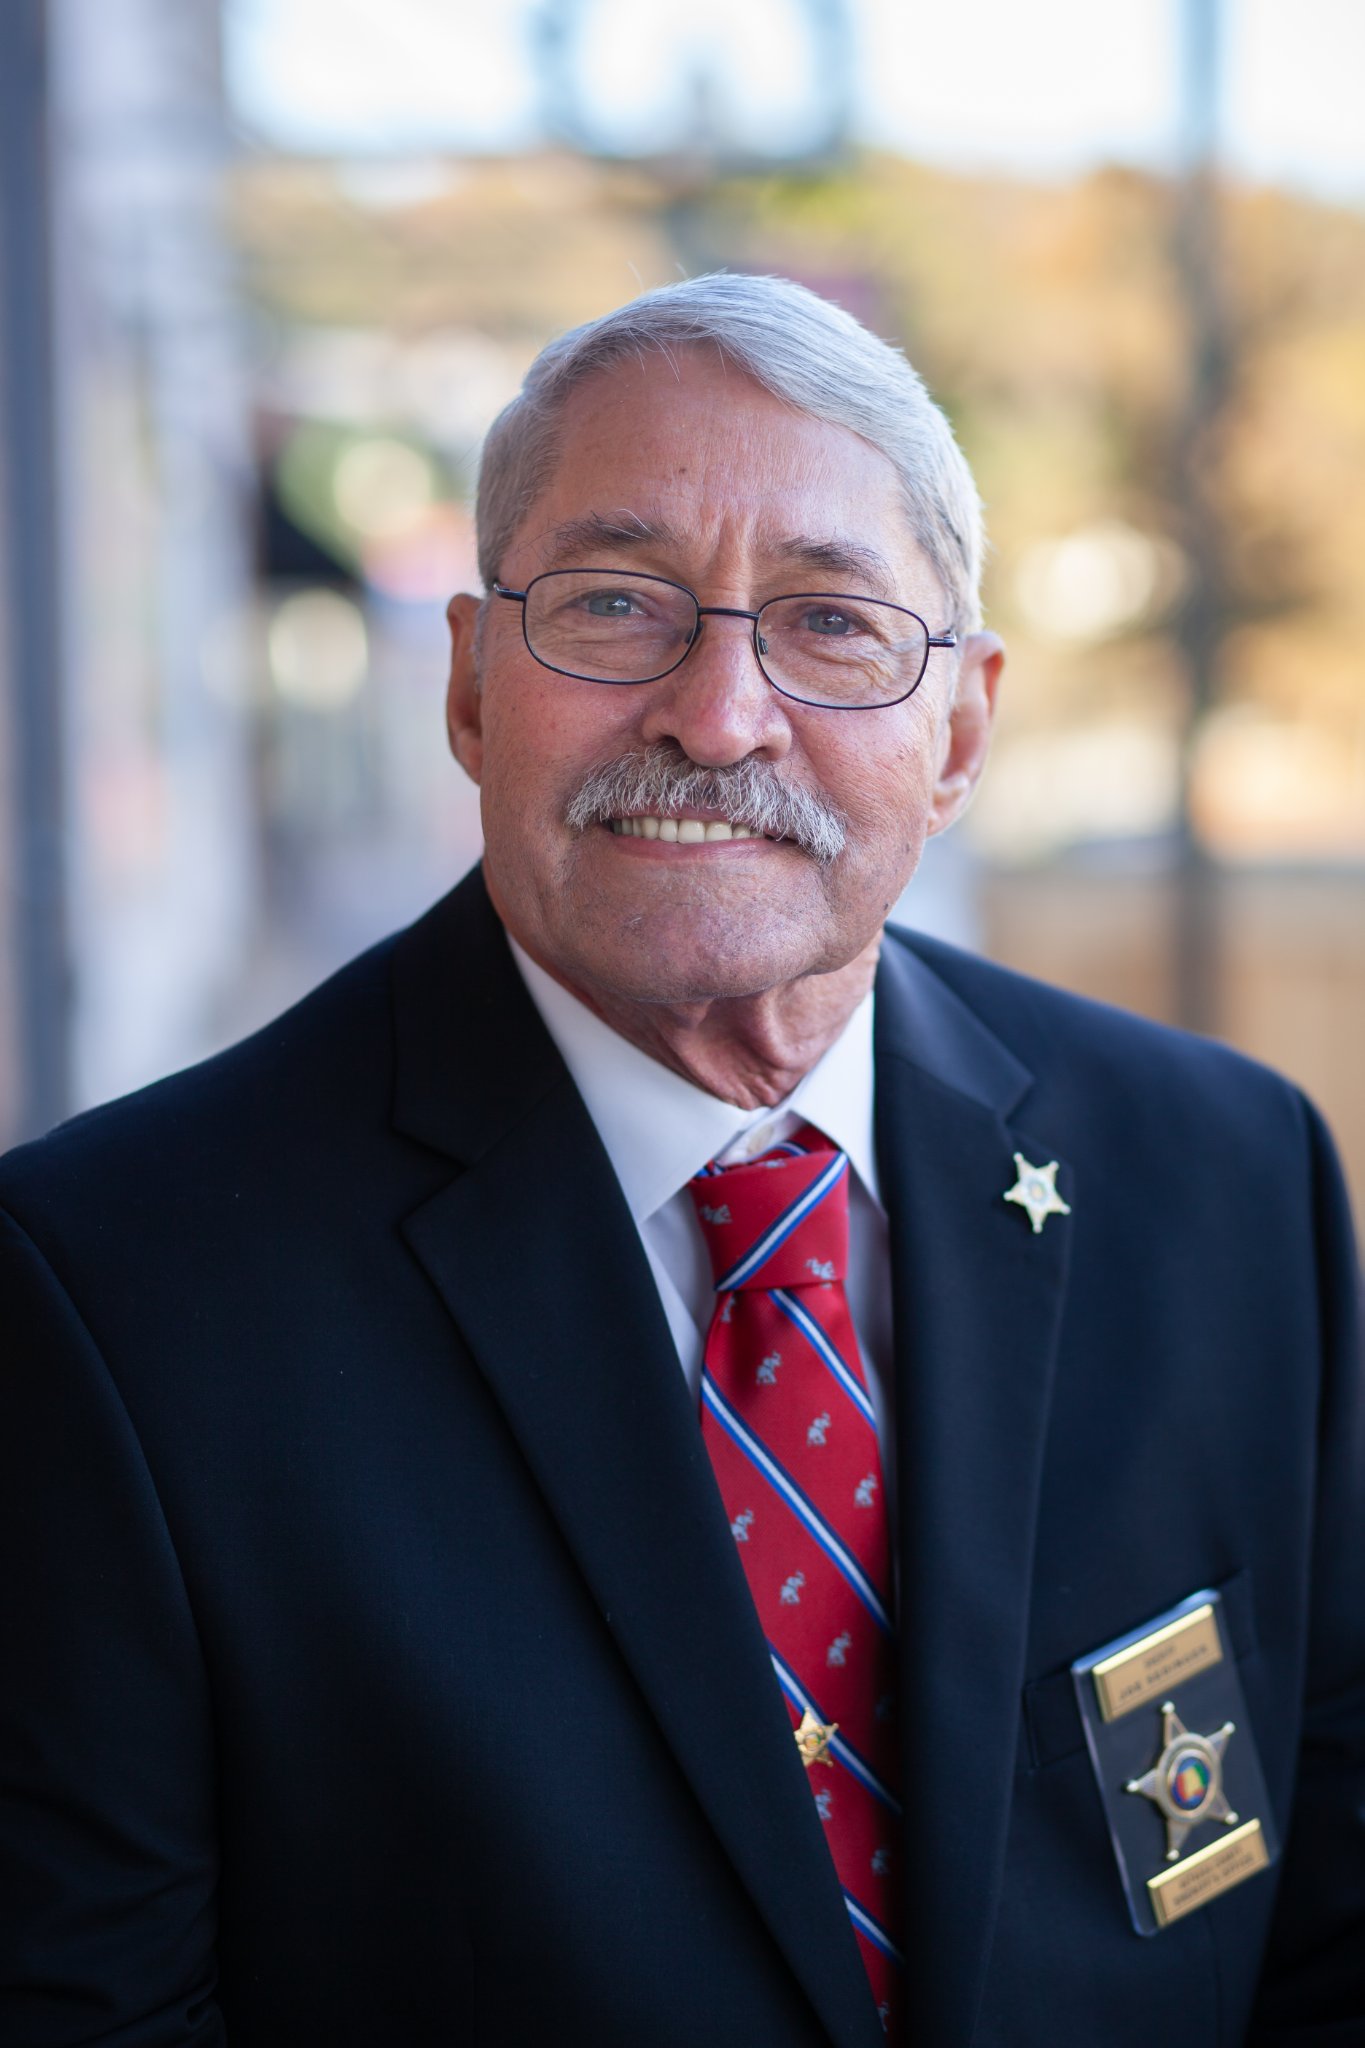   Funeral Arrangements Announced for Autauga Co. Sheriff Joe Sedinger  